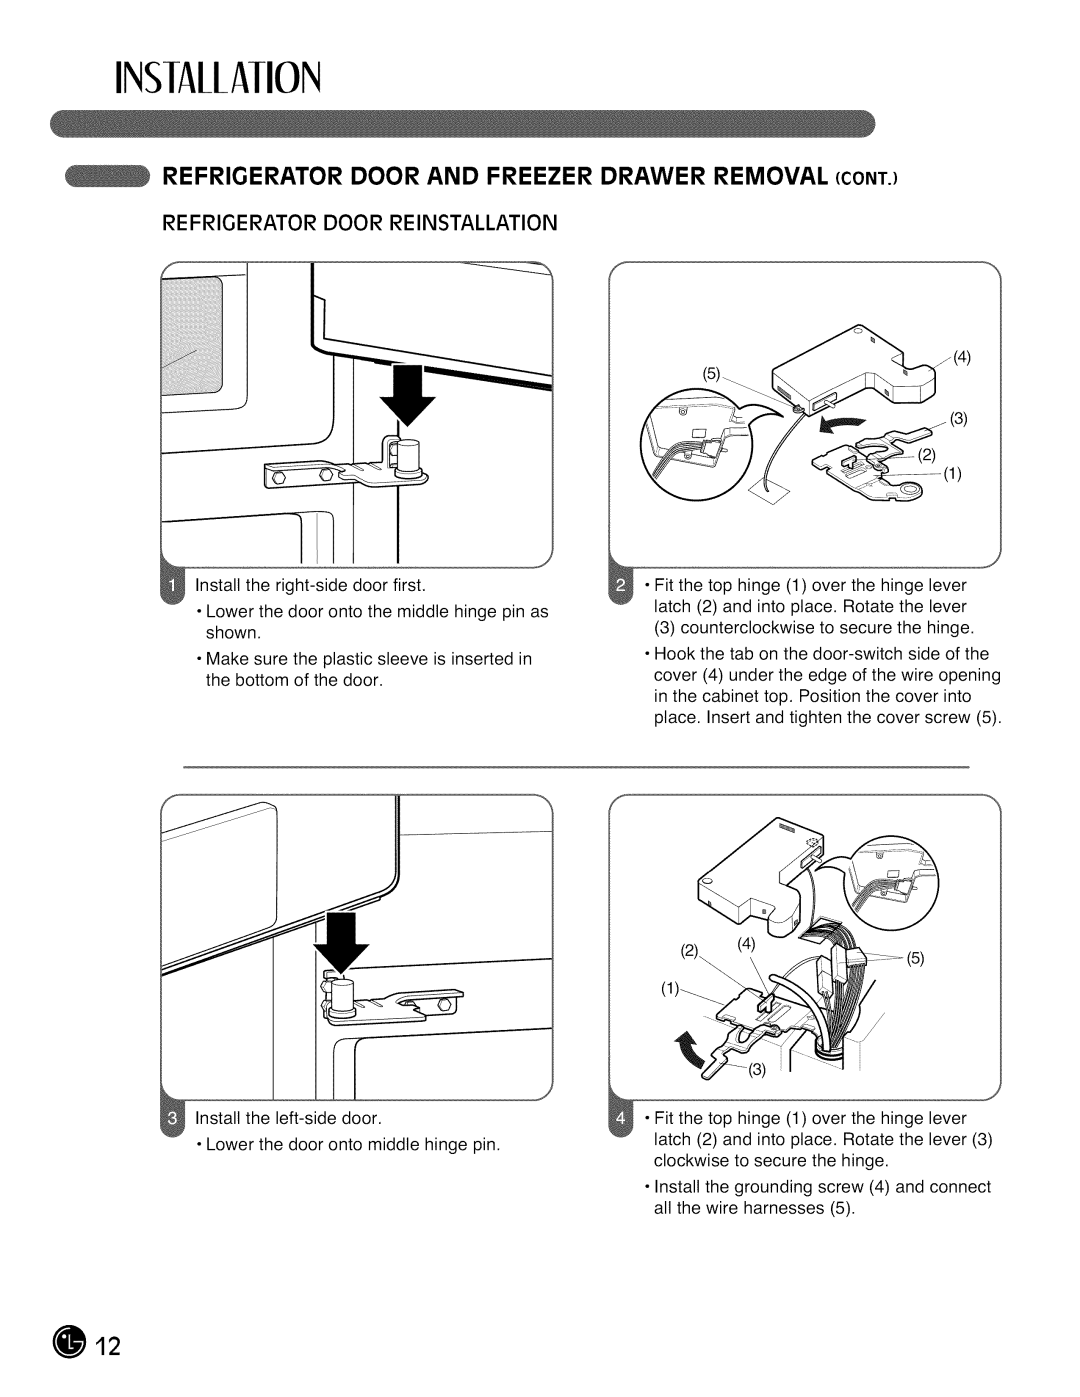 LG Electronics LMX28988 Refrigerator Door Reinstallation, INSIAllAIION, Refrigerator Door And Freezer Drawer Removal Cont 